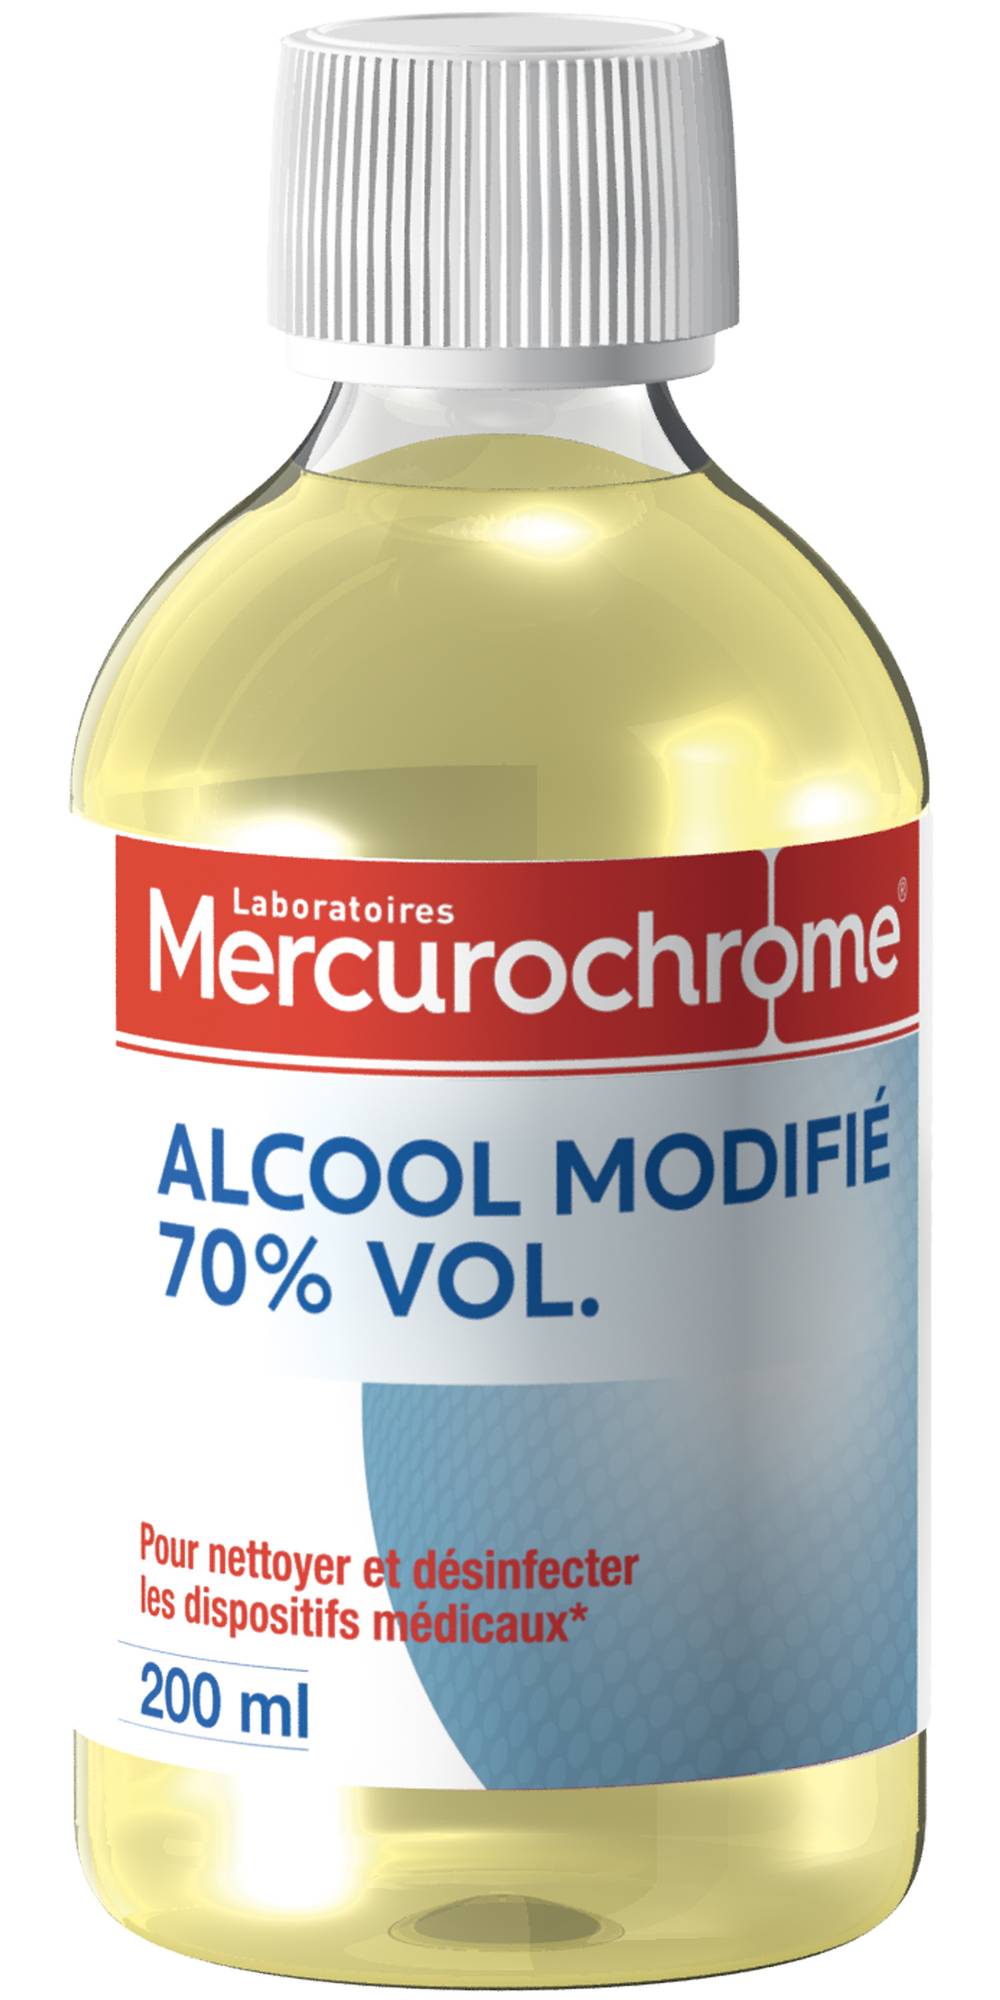 Mercurochrome - Alcool modifié